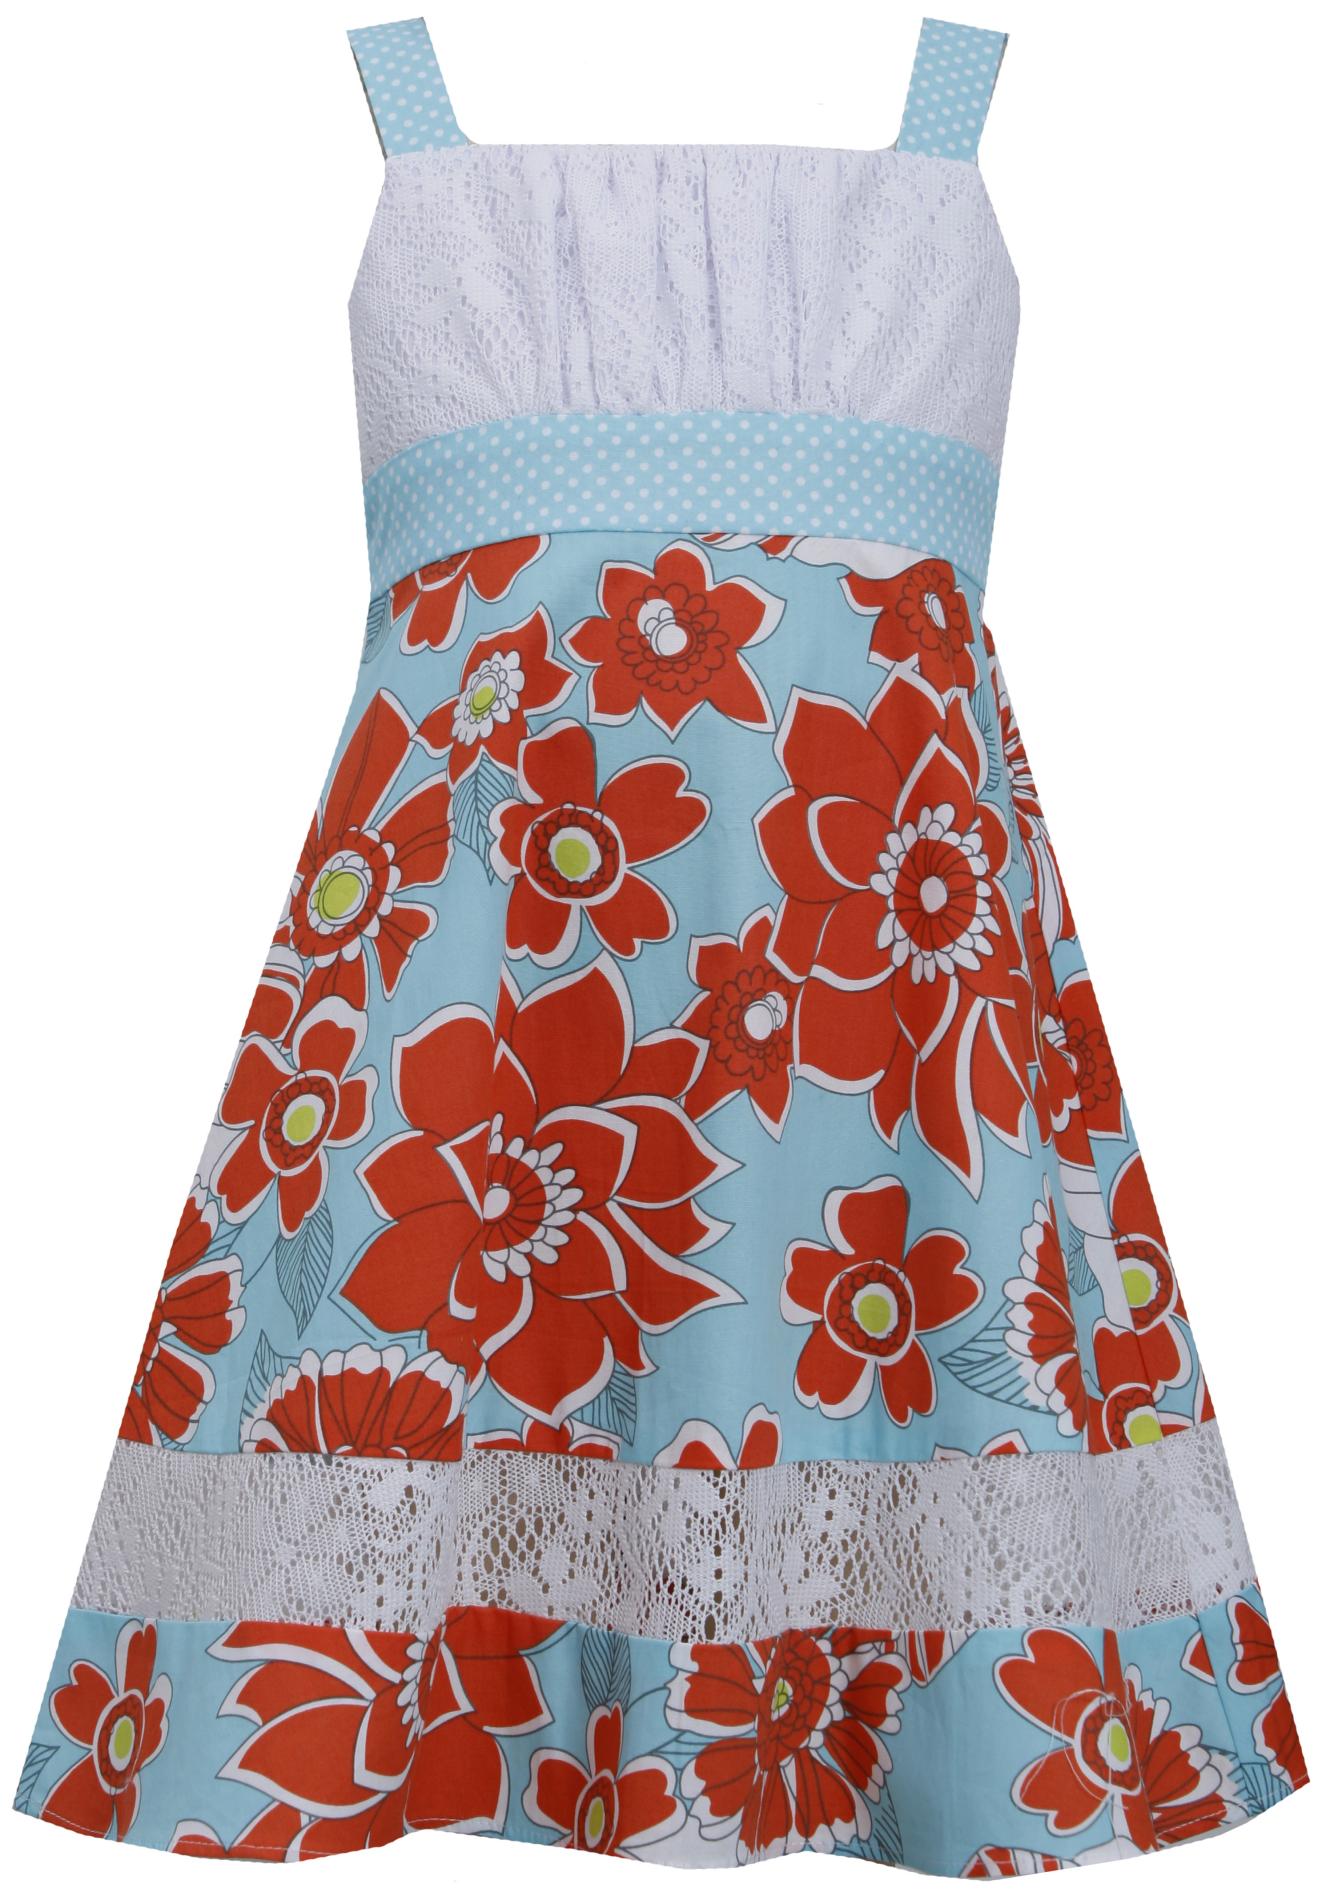 Ashley Ann Girl's Spring Dress - Floral Eyelet